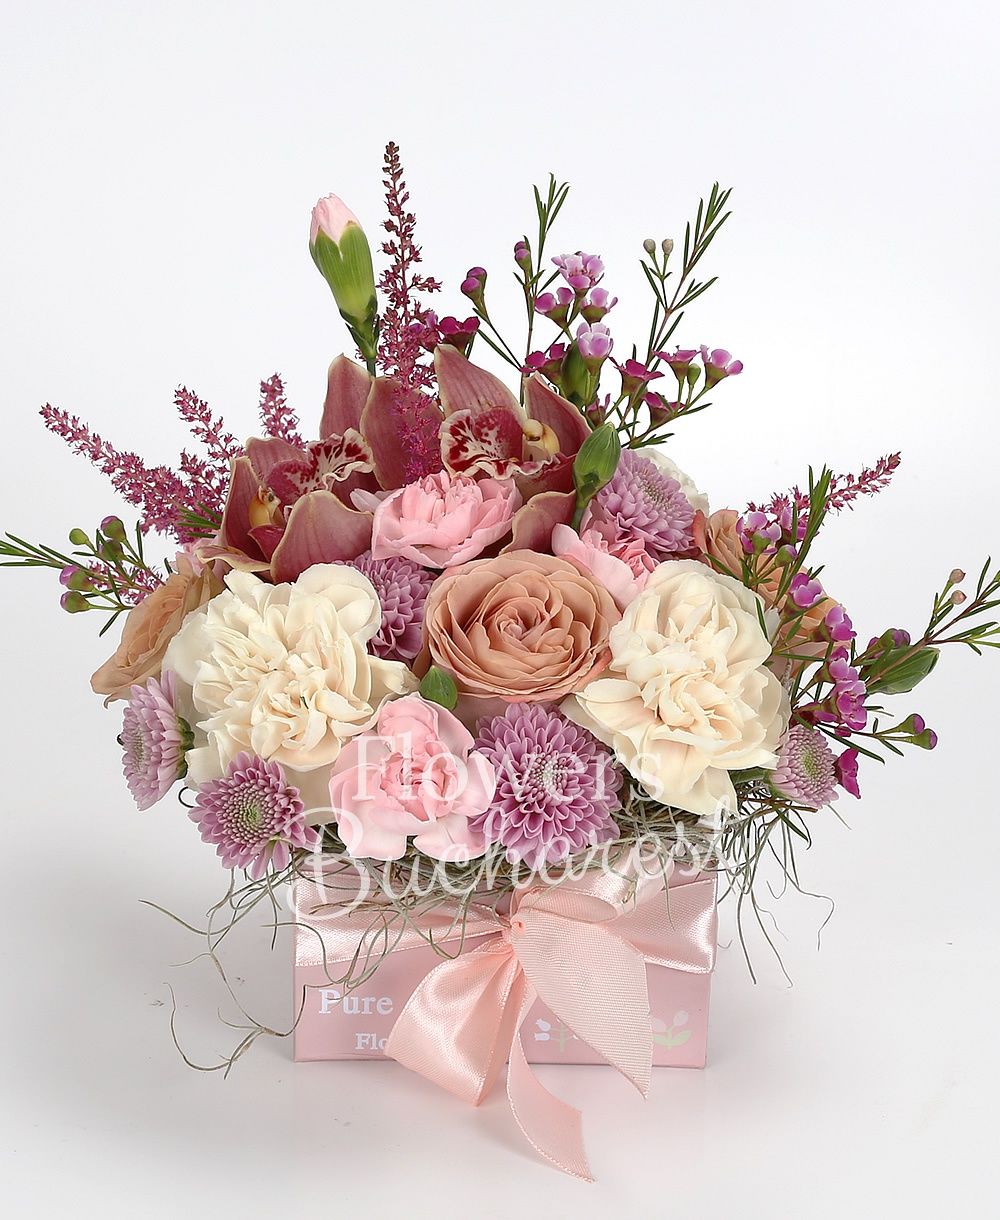 3 cappuccino roses, 3 cream carnations, 3 pink carnations, 3 purple santini, 1 pink waxflower, 3 red astilbe, garnet cymbidium, greenery